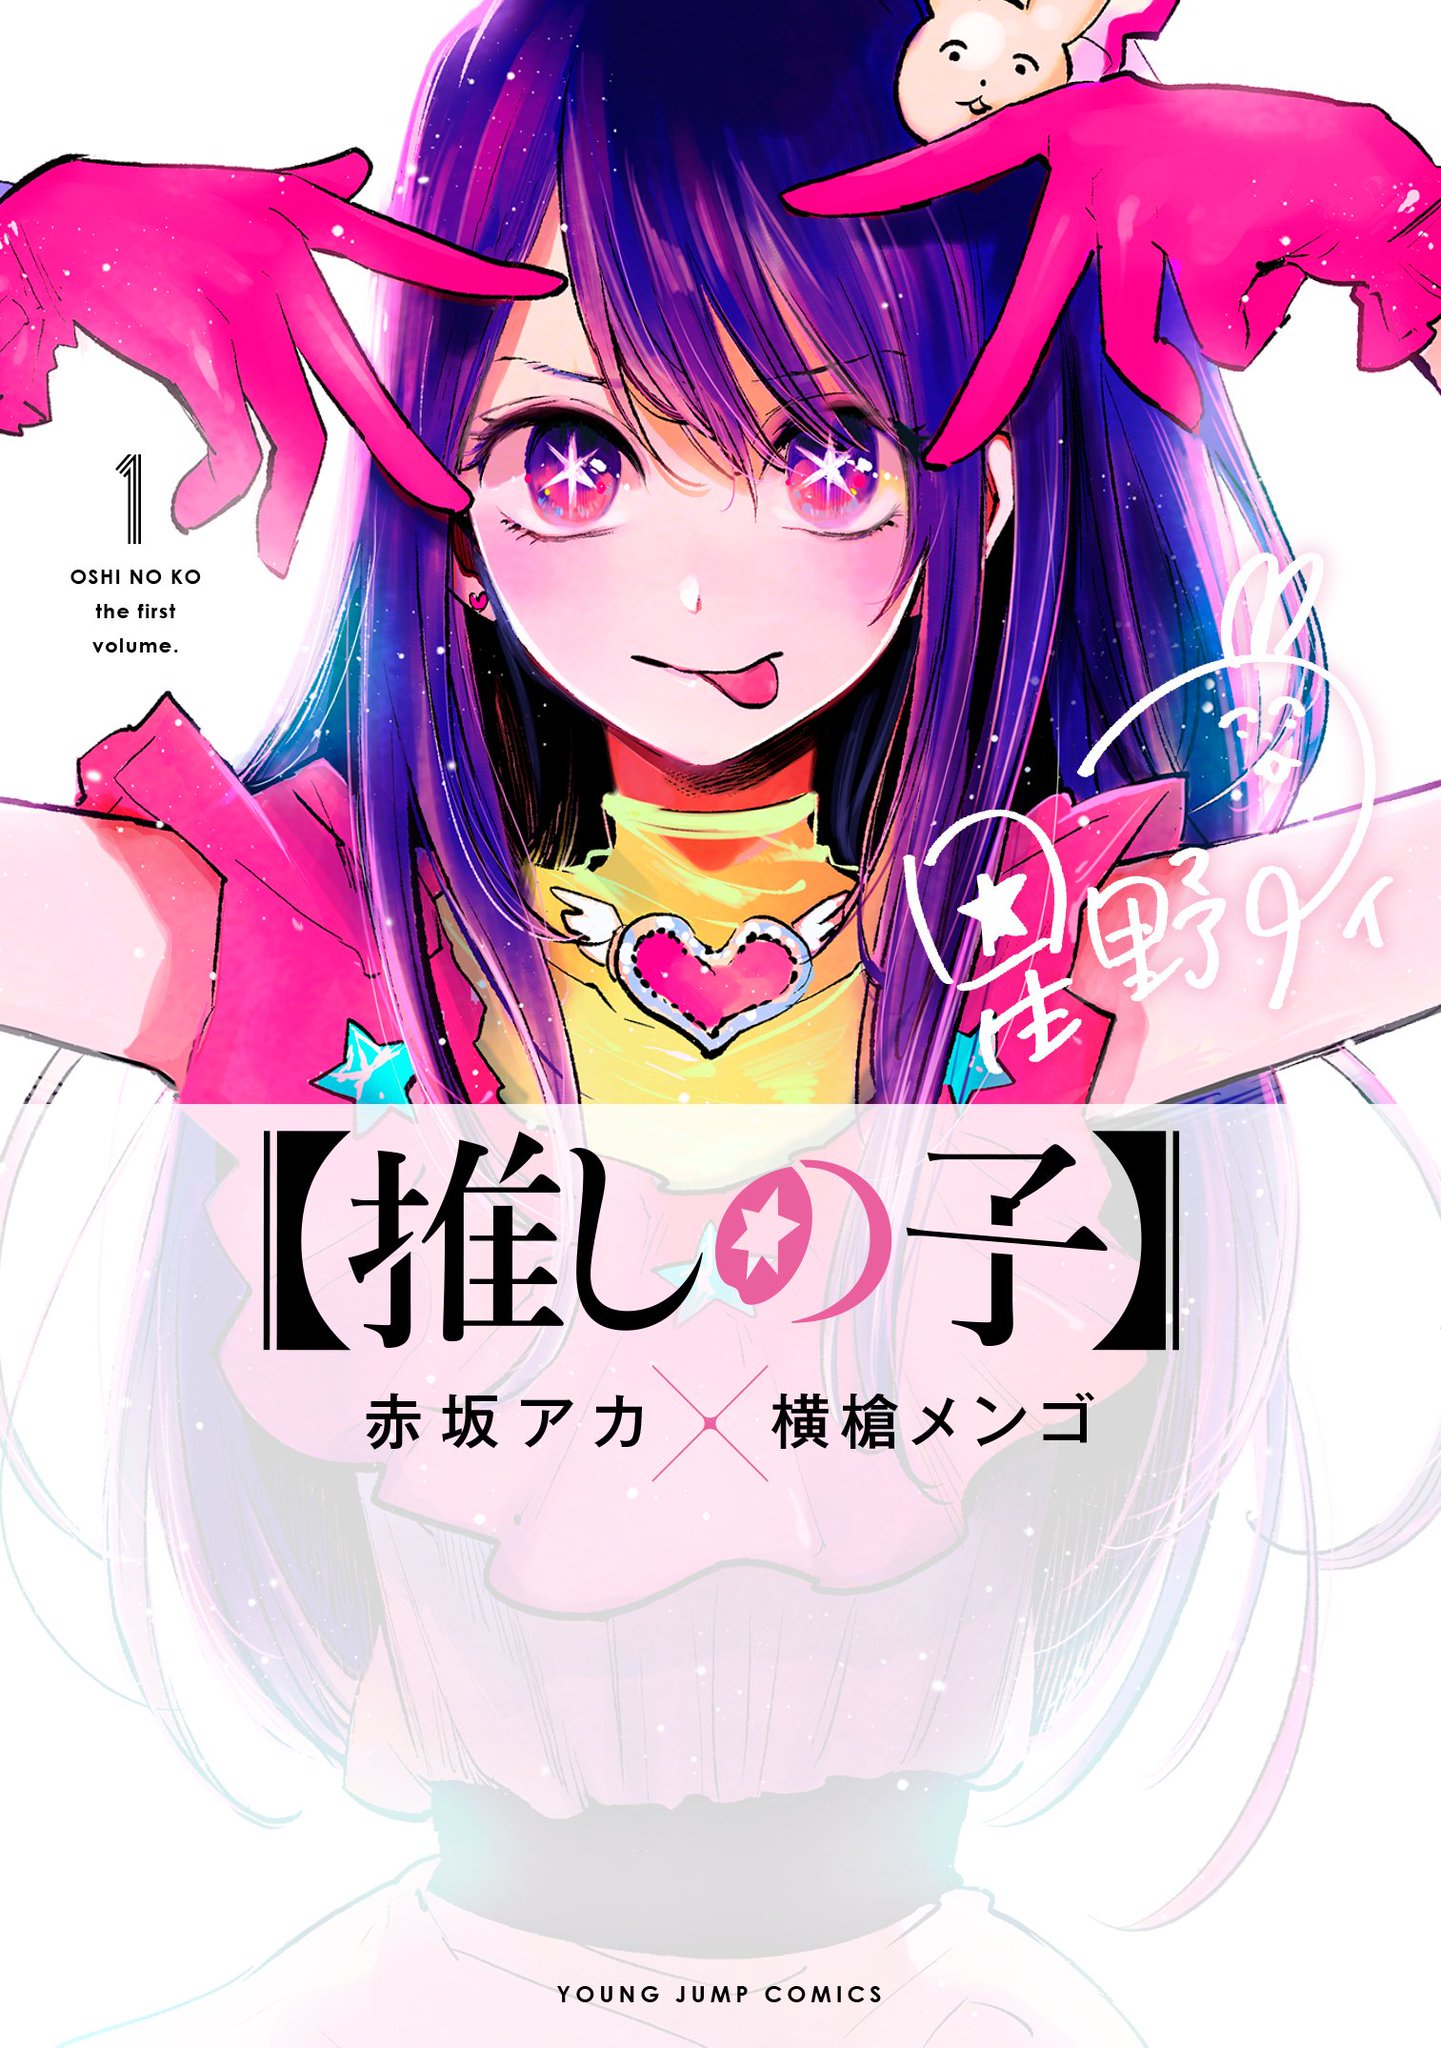 The Oshi no Ko manga reveals the cover of its first volume ...